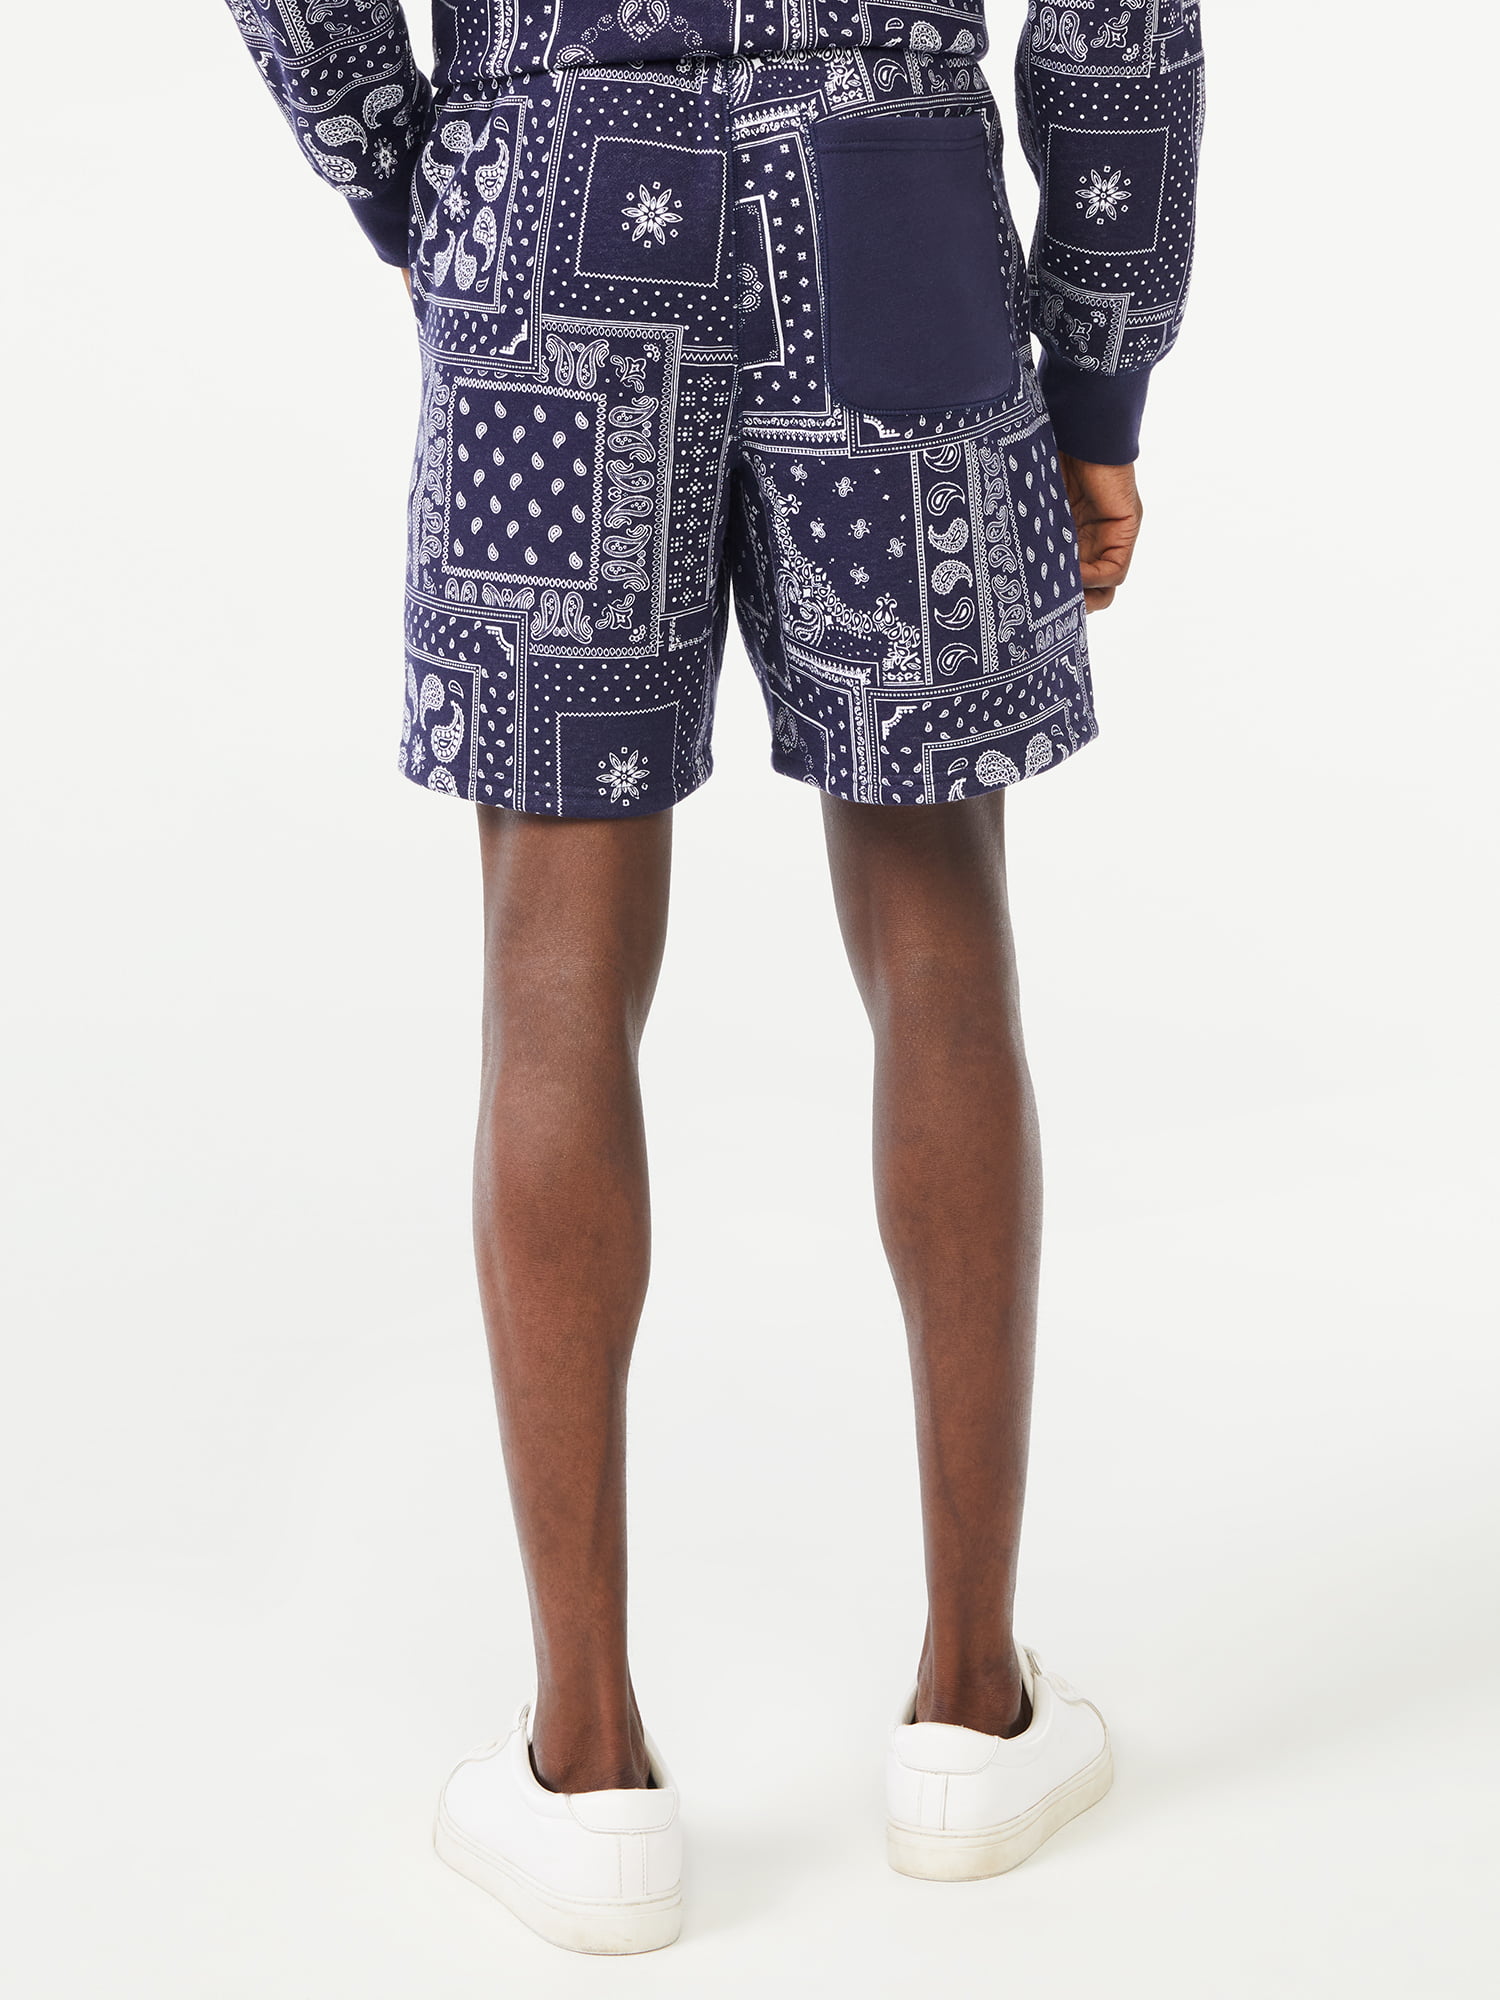 Free Assembly Men's Fleece Bandana Printed Shorts